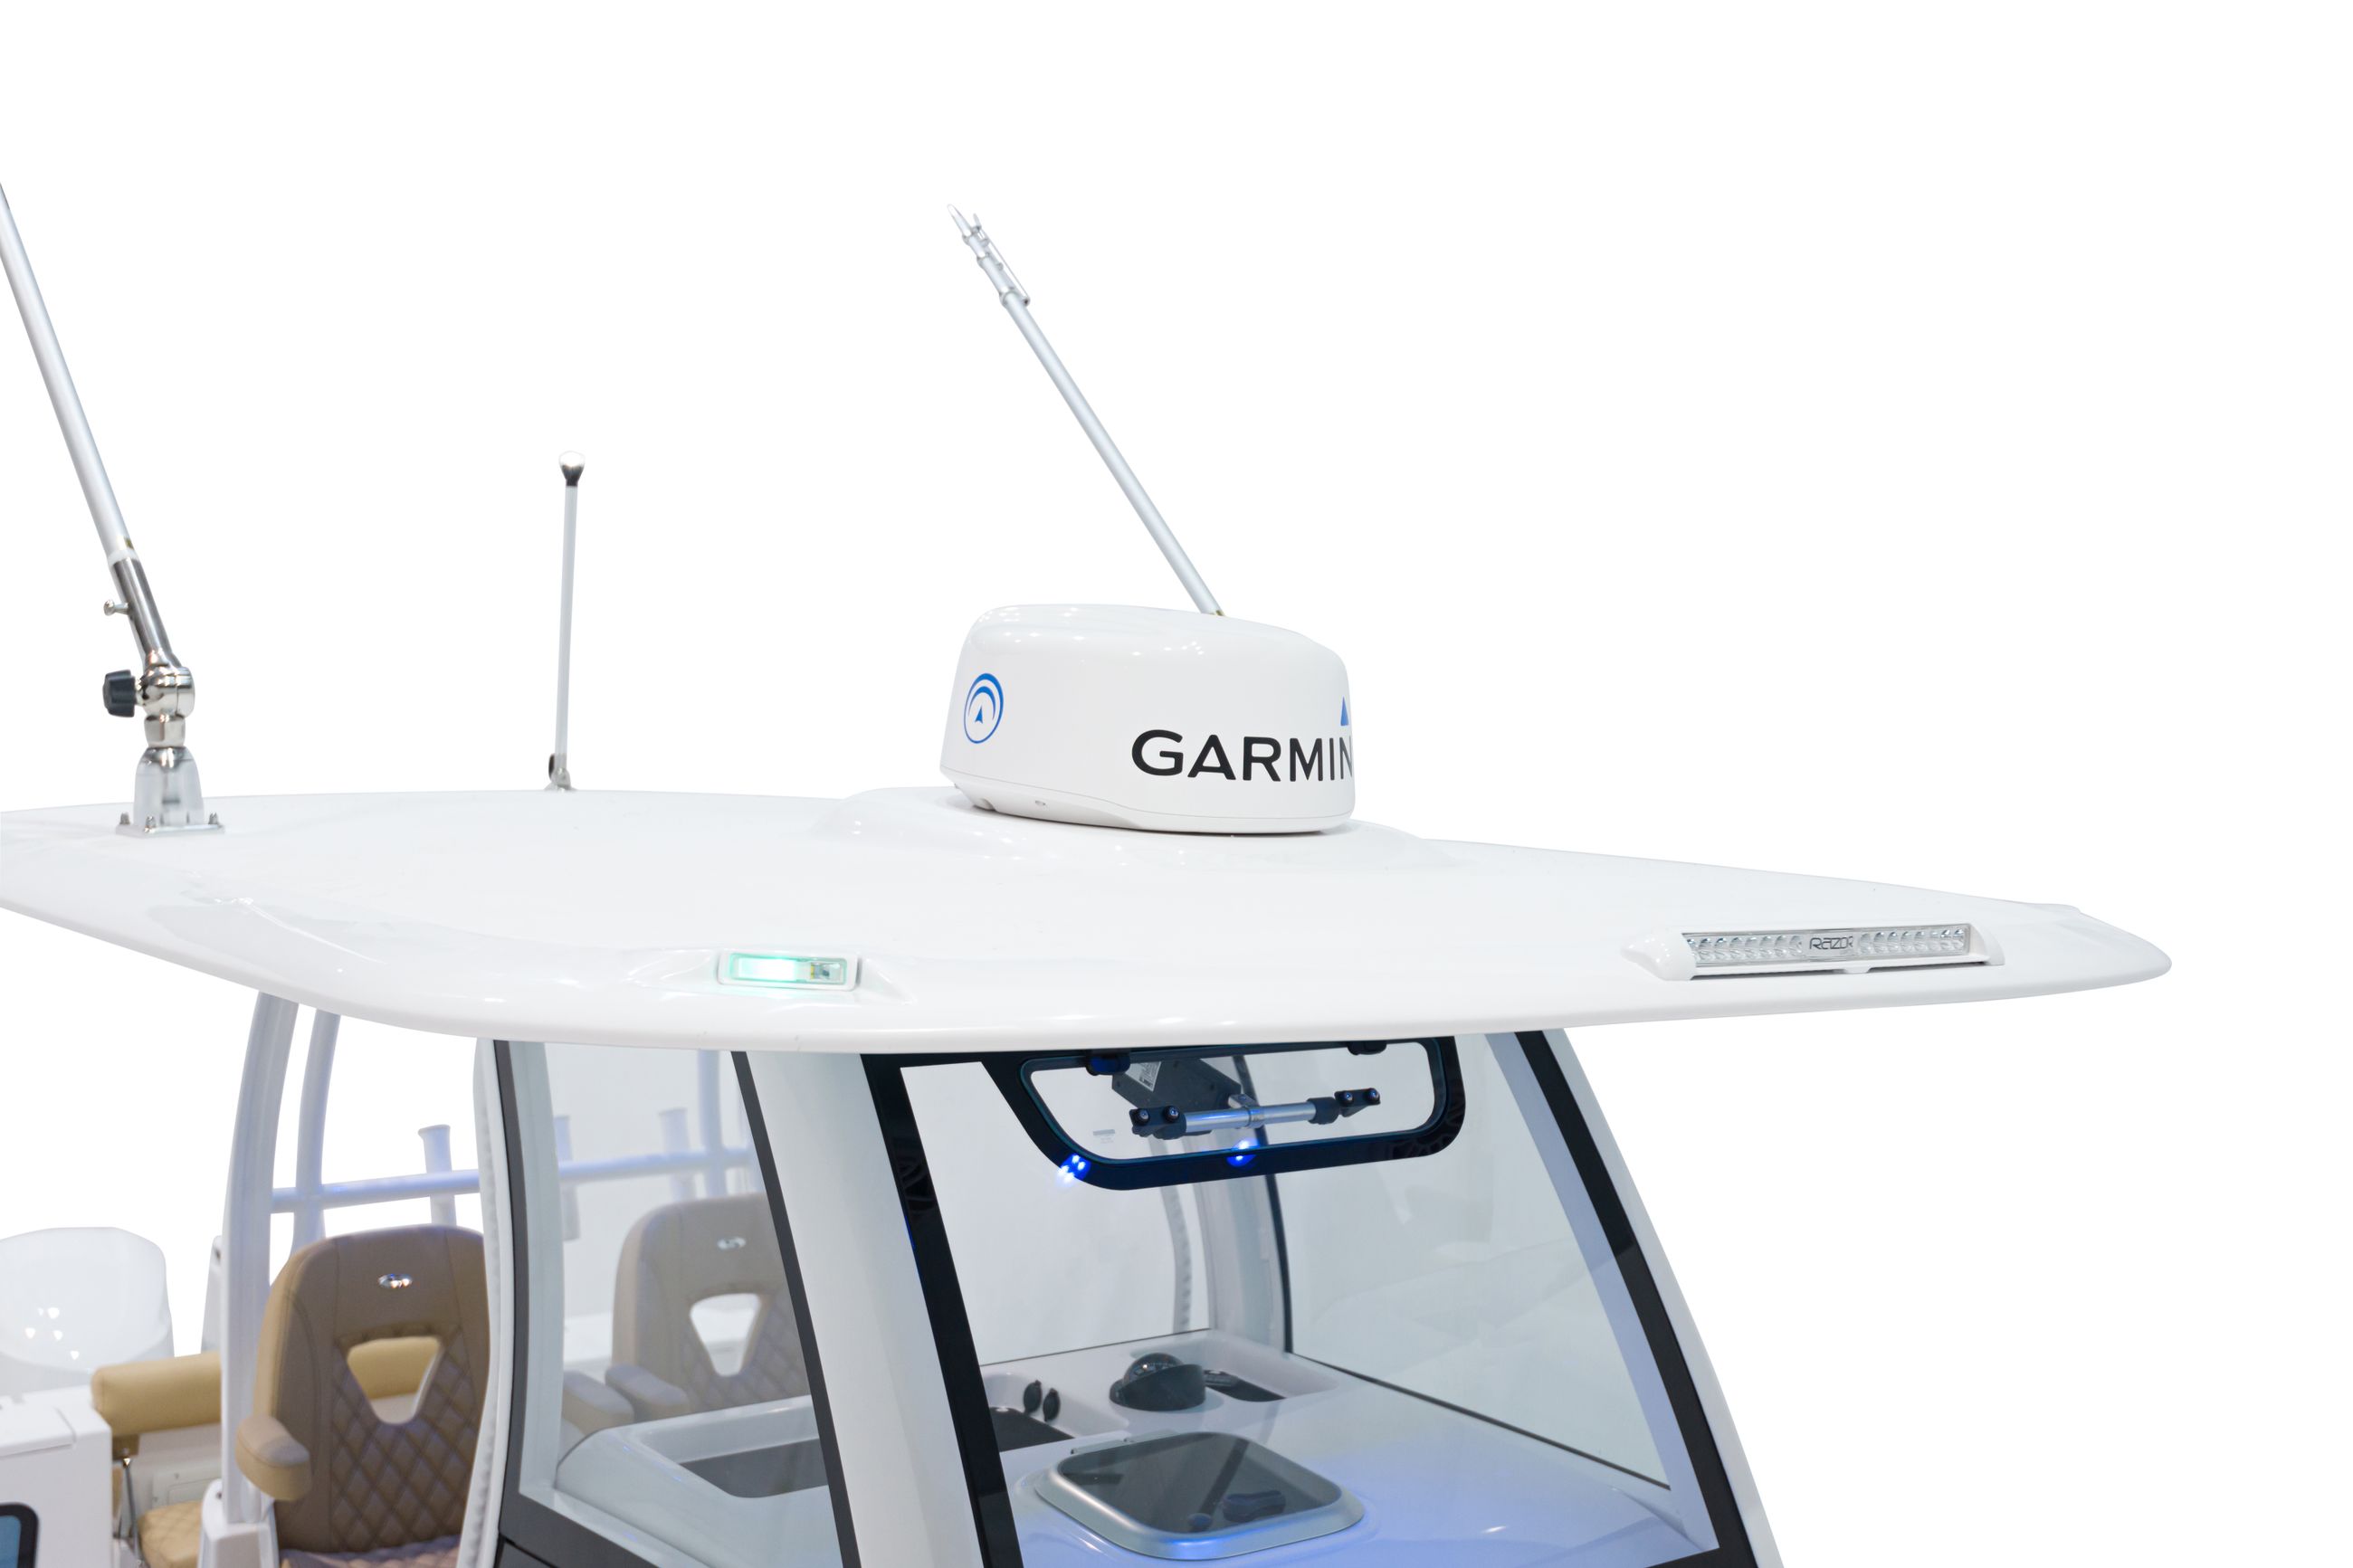 Detail image of Garmin GMR™ Fantom 18 Radome